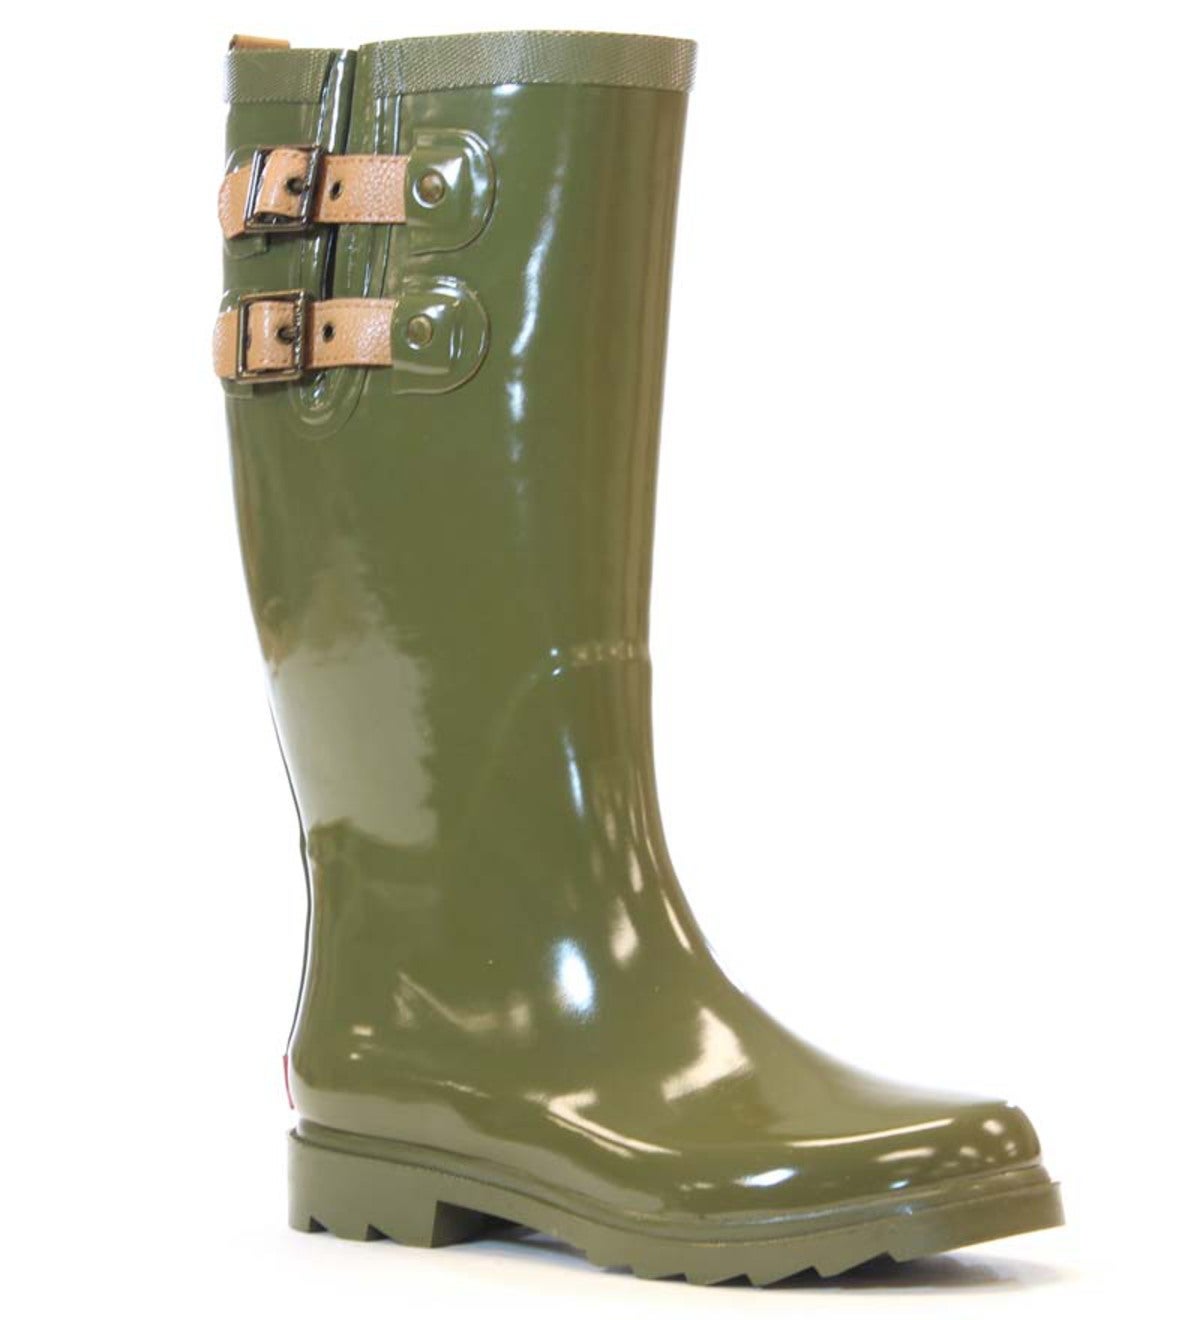 Chooka® Women's Shiny Tall Rain Boots - Marigold - Size 8